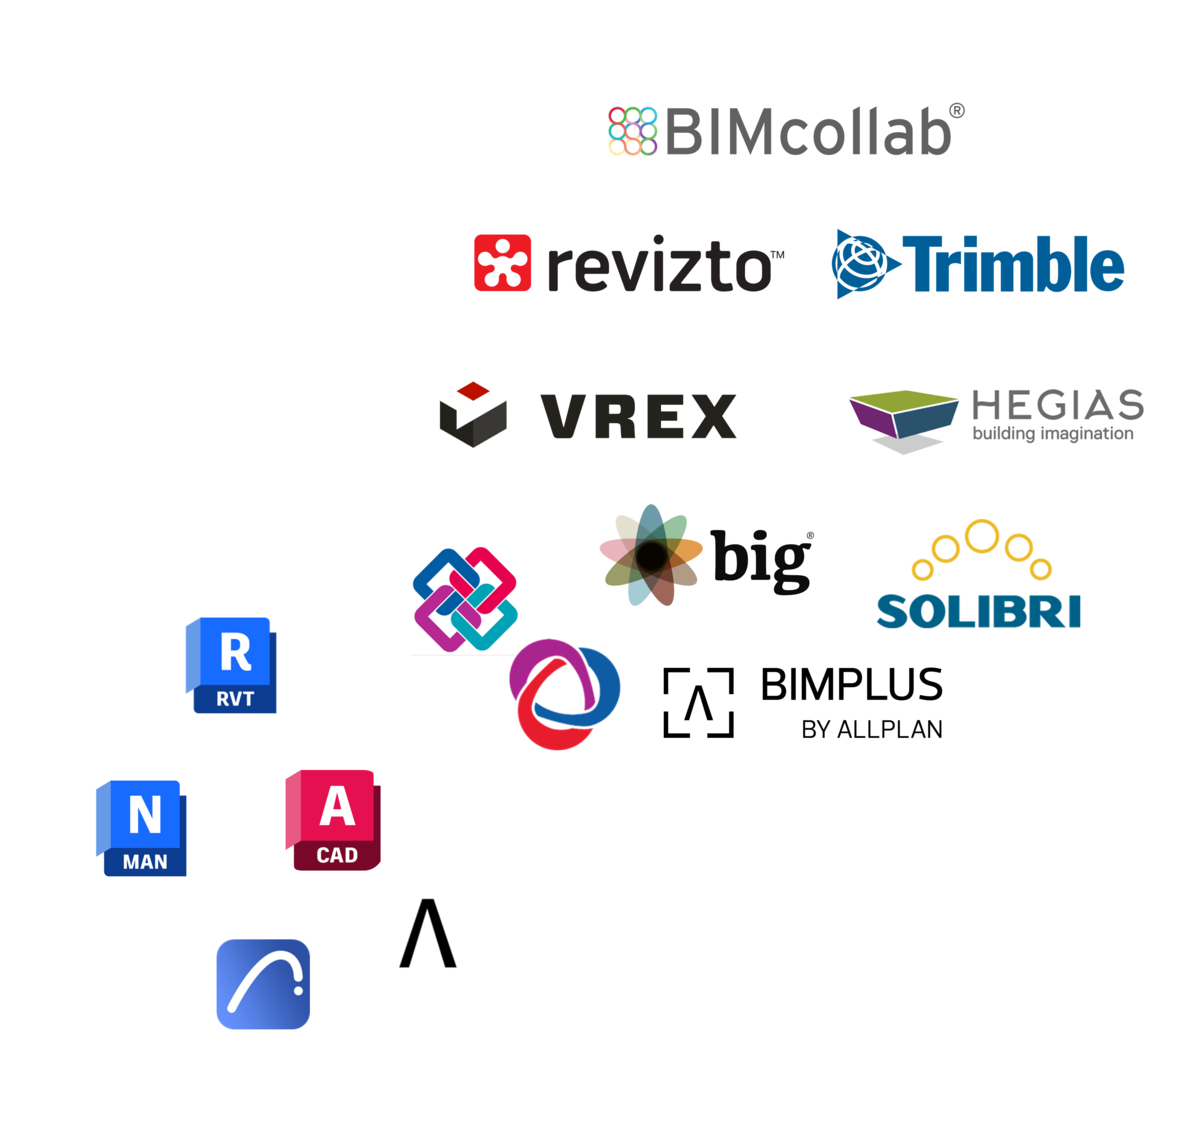 Integration BIM (Solibri, VREX, HEGIAS, BIMcollab, Trimble, big und Revizto, IFC, BCF, openBIM)